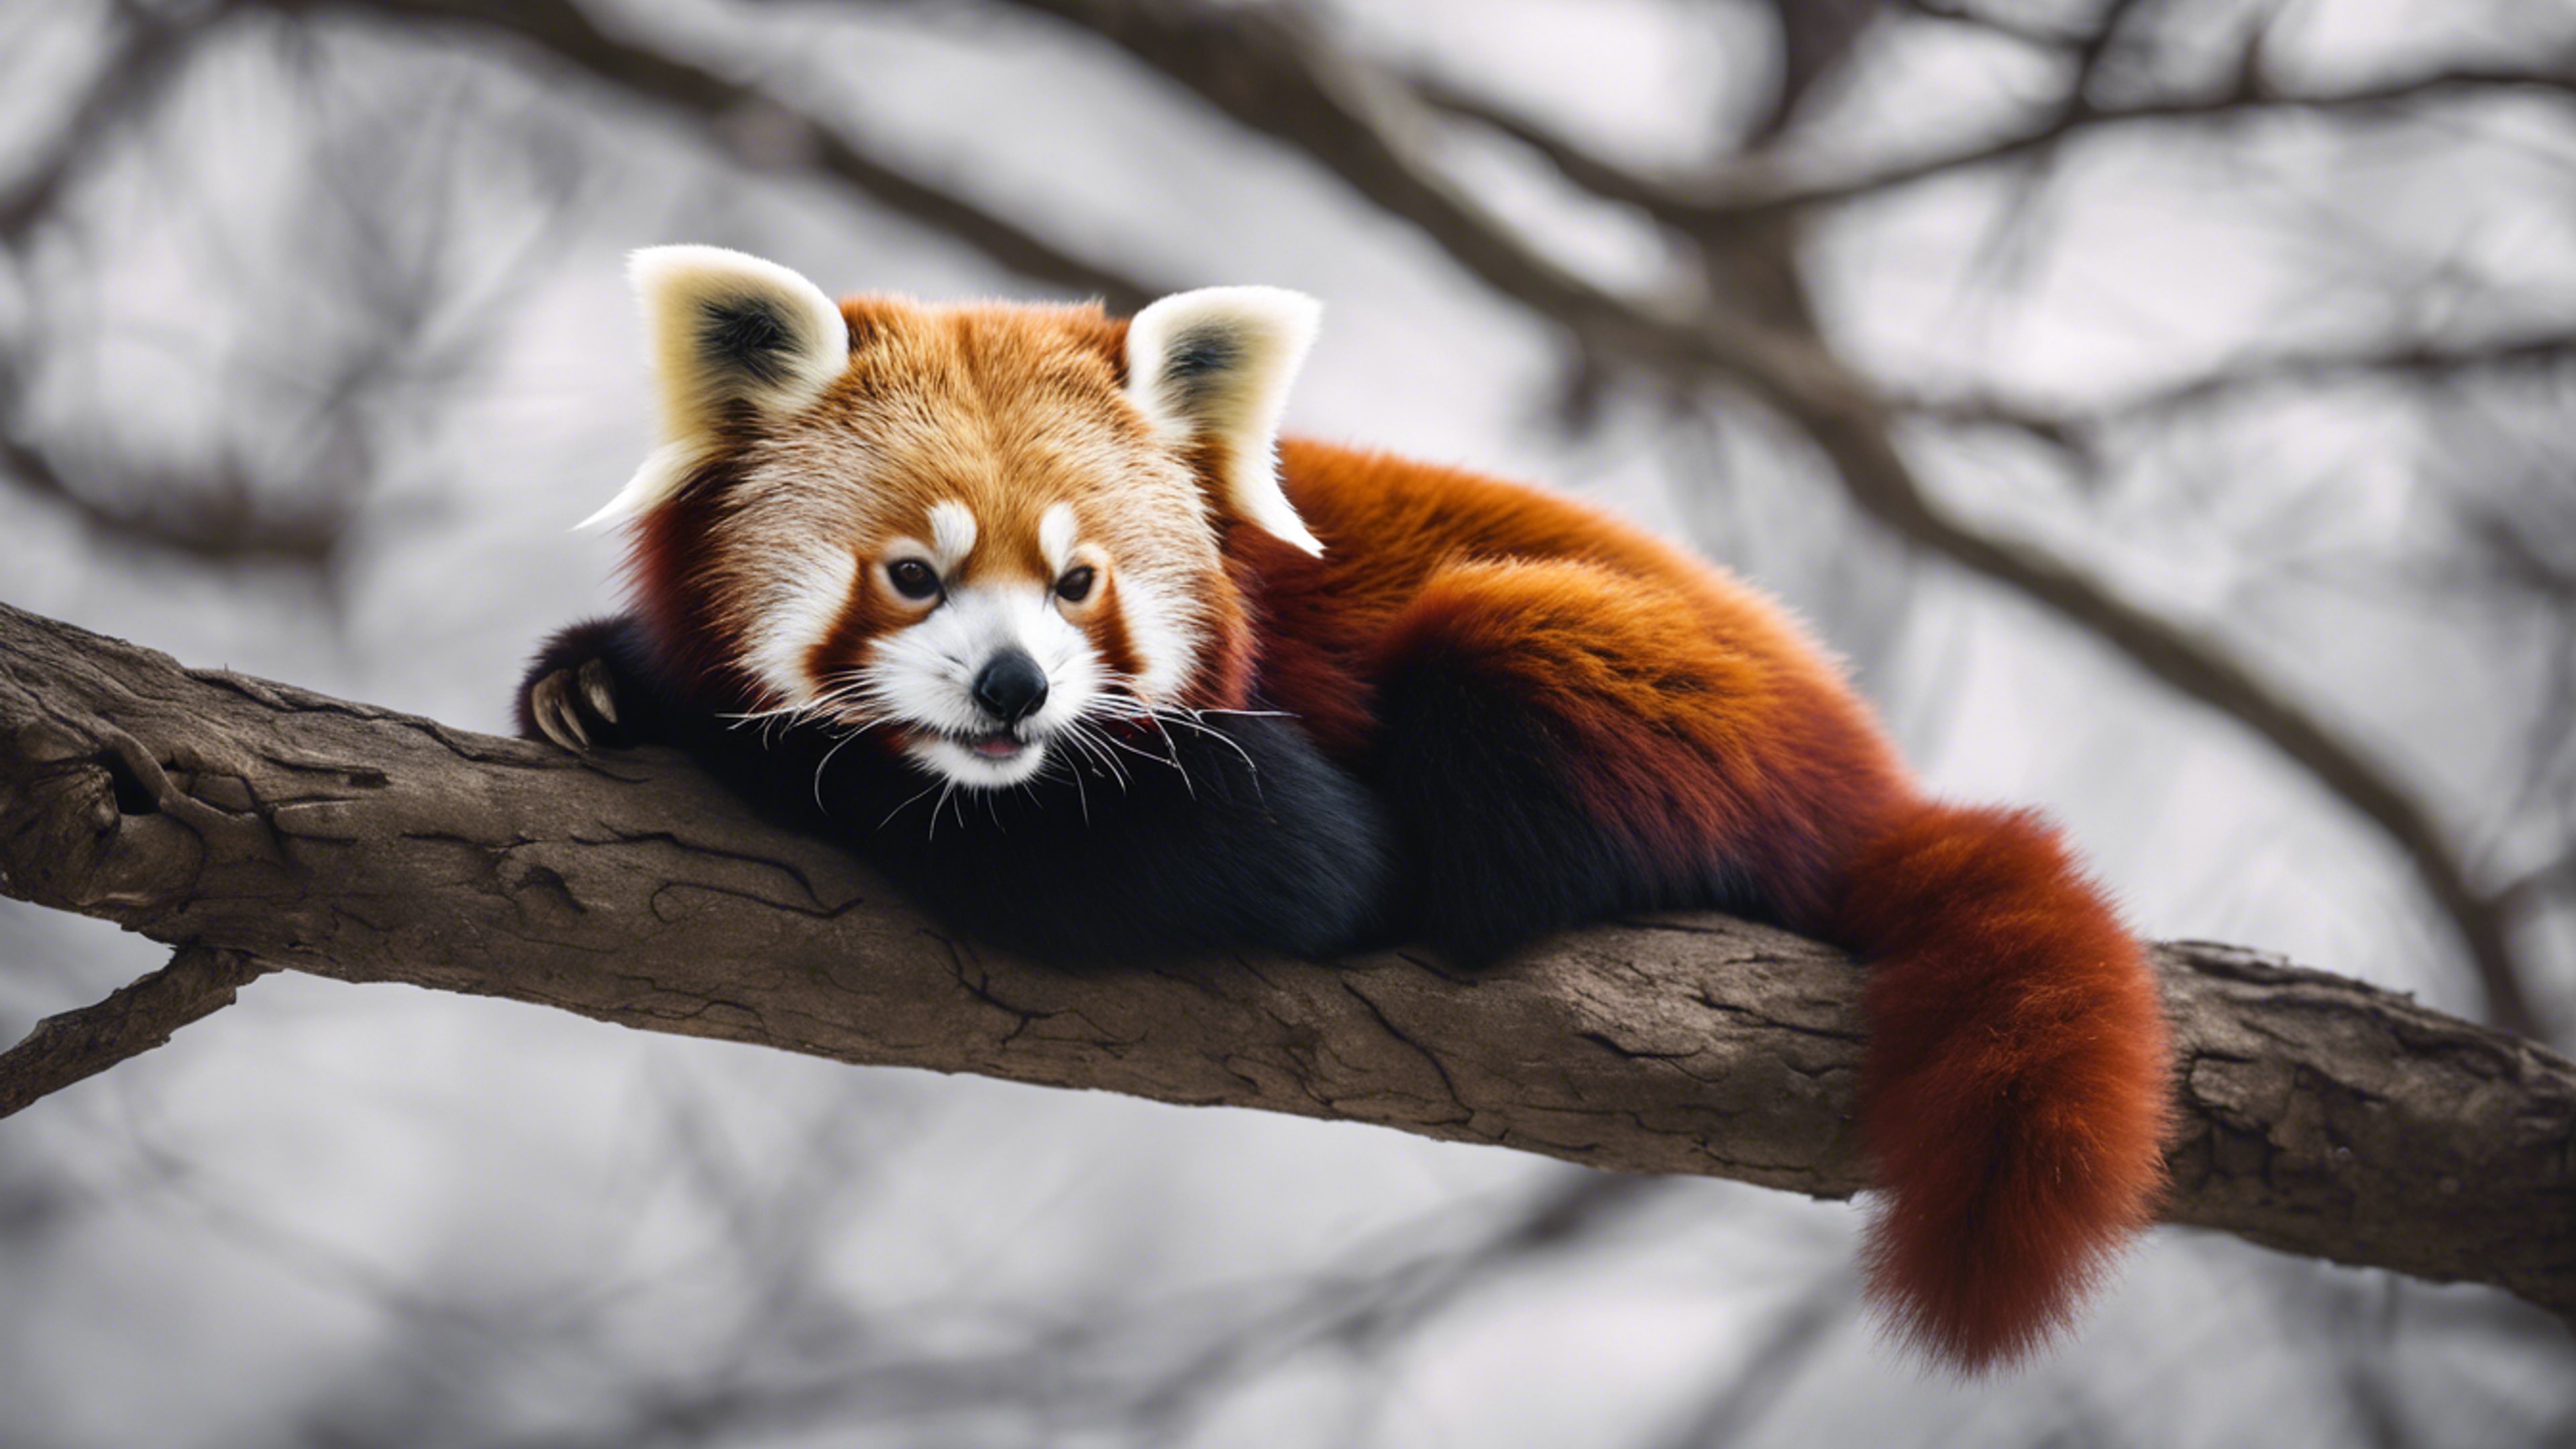 A red panda enjoying a peaceful nap on a thick tree branch.壁紙[0844f7d1c6274207ac91]